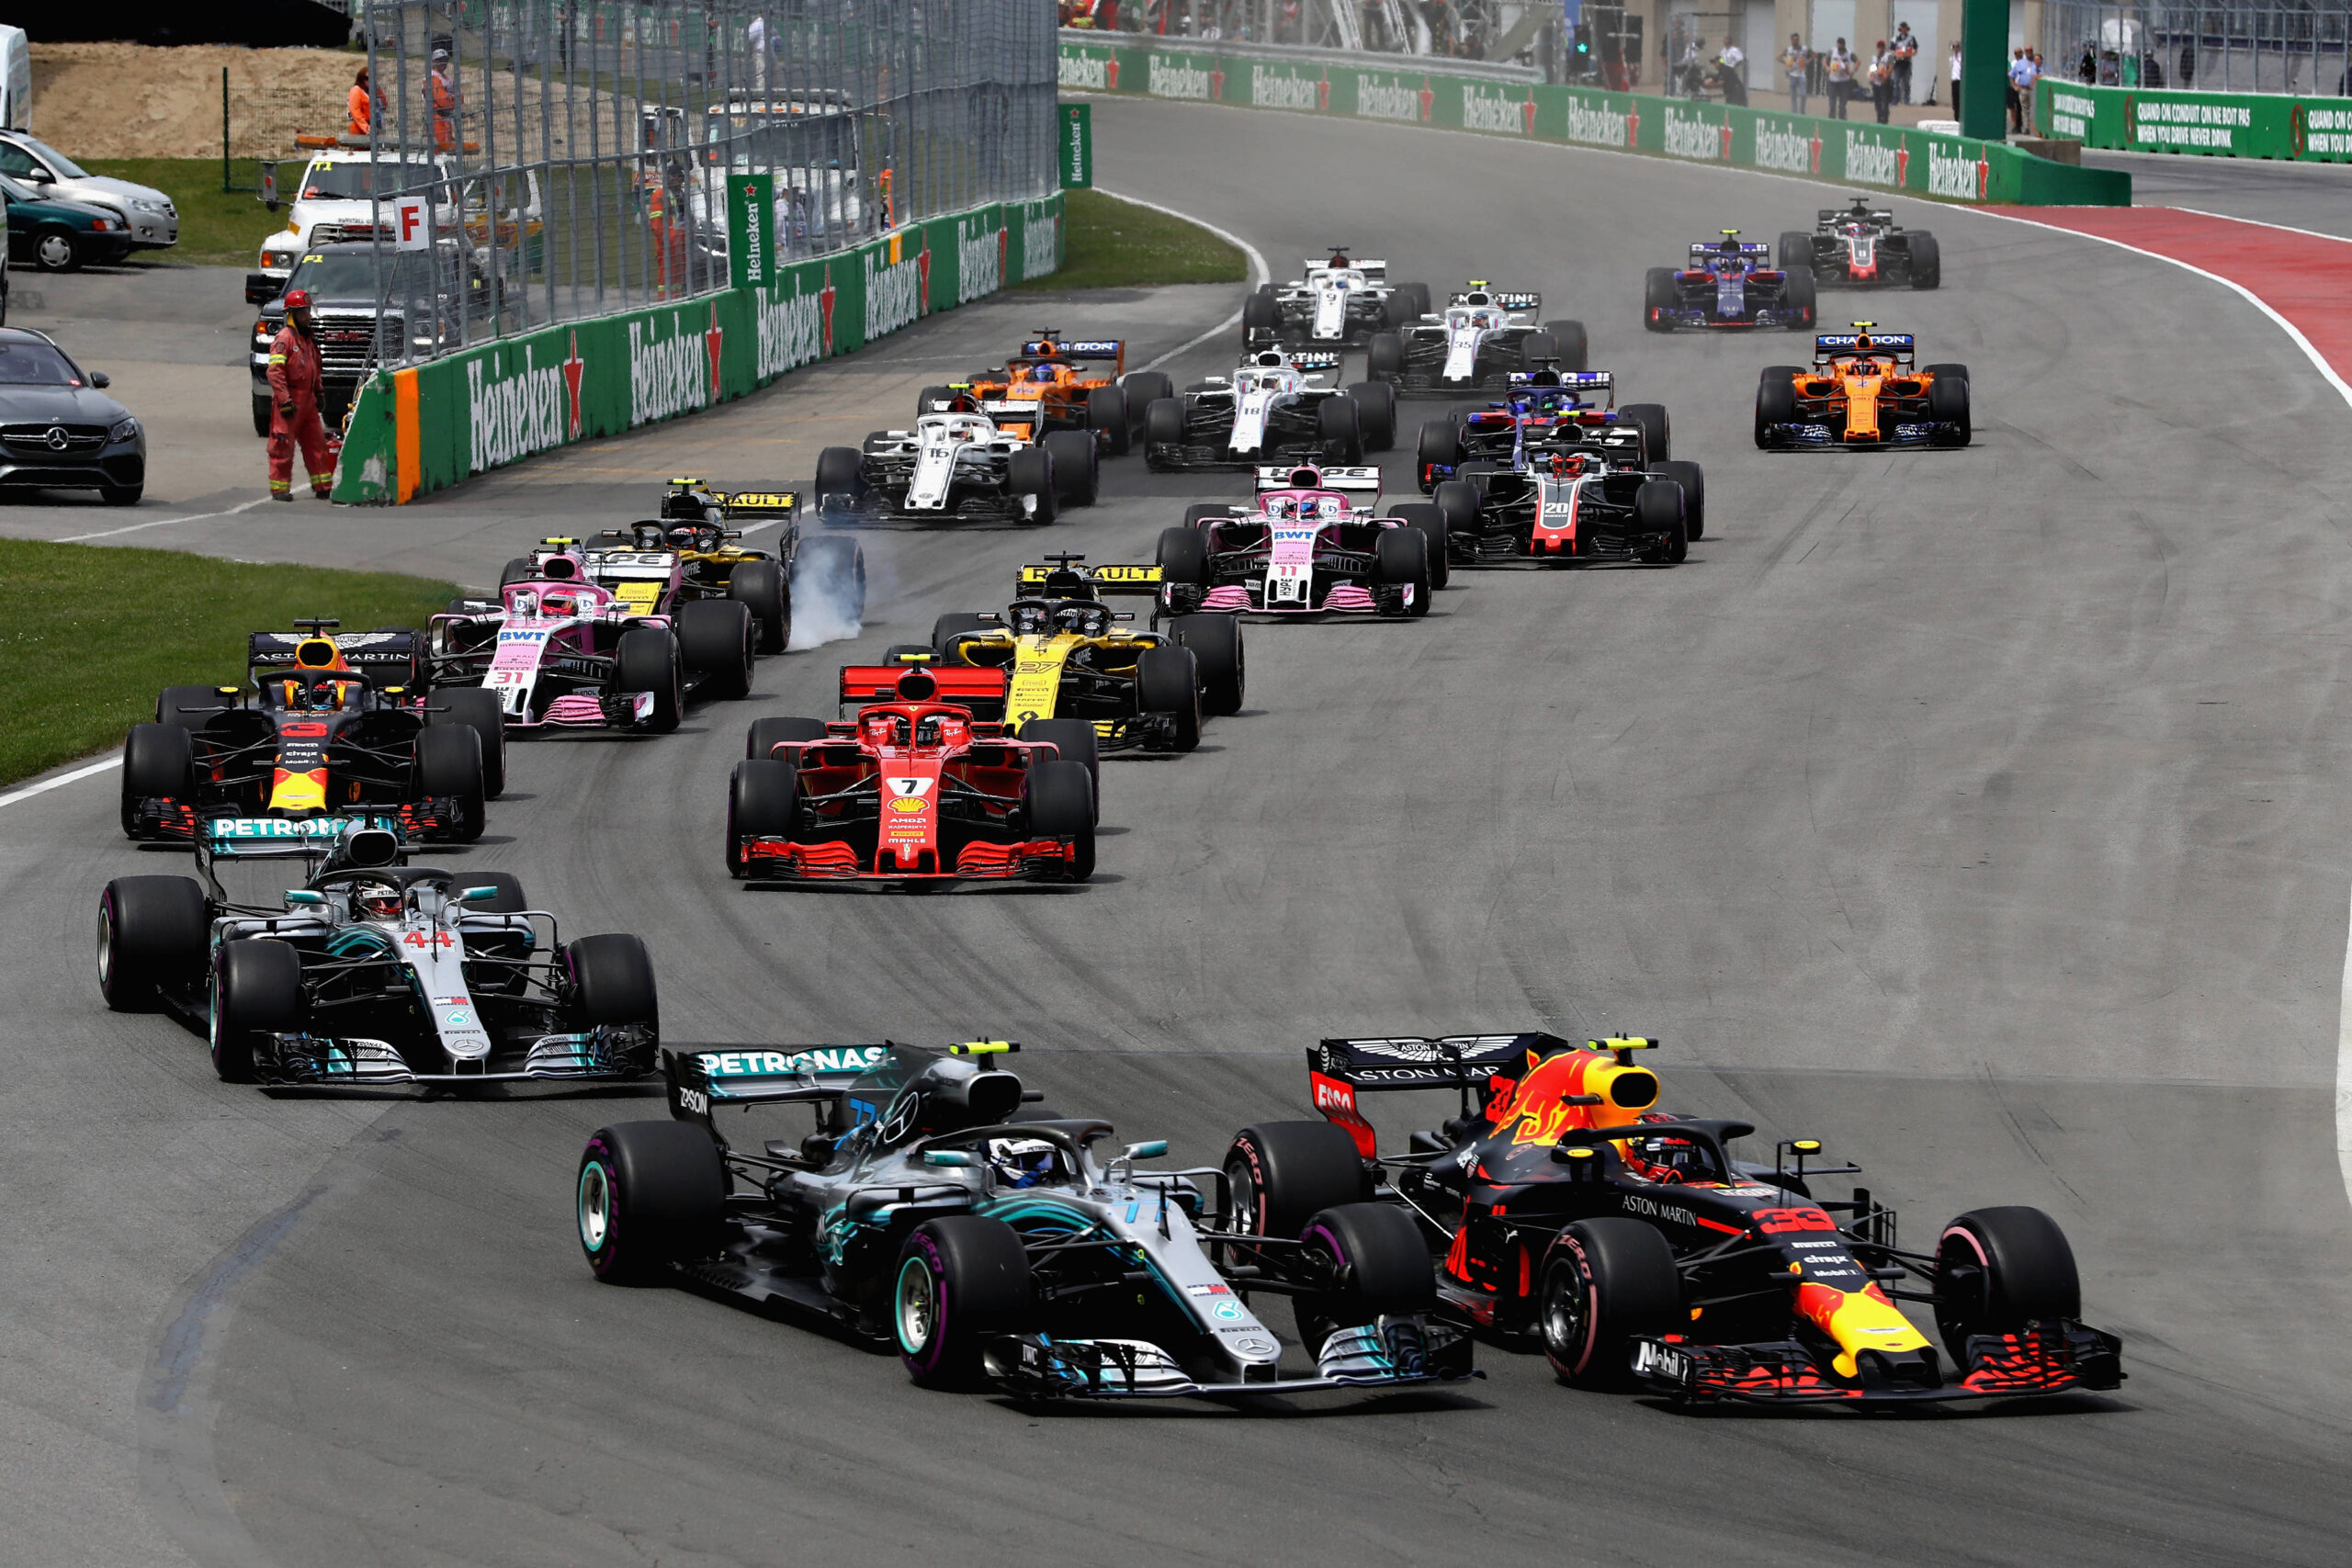 Race start of the 2018 Canadian Grand Prix at Circuit Gilles Villeneuve